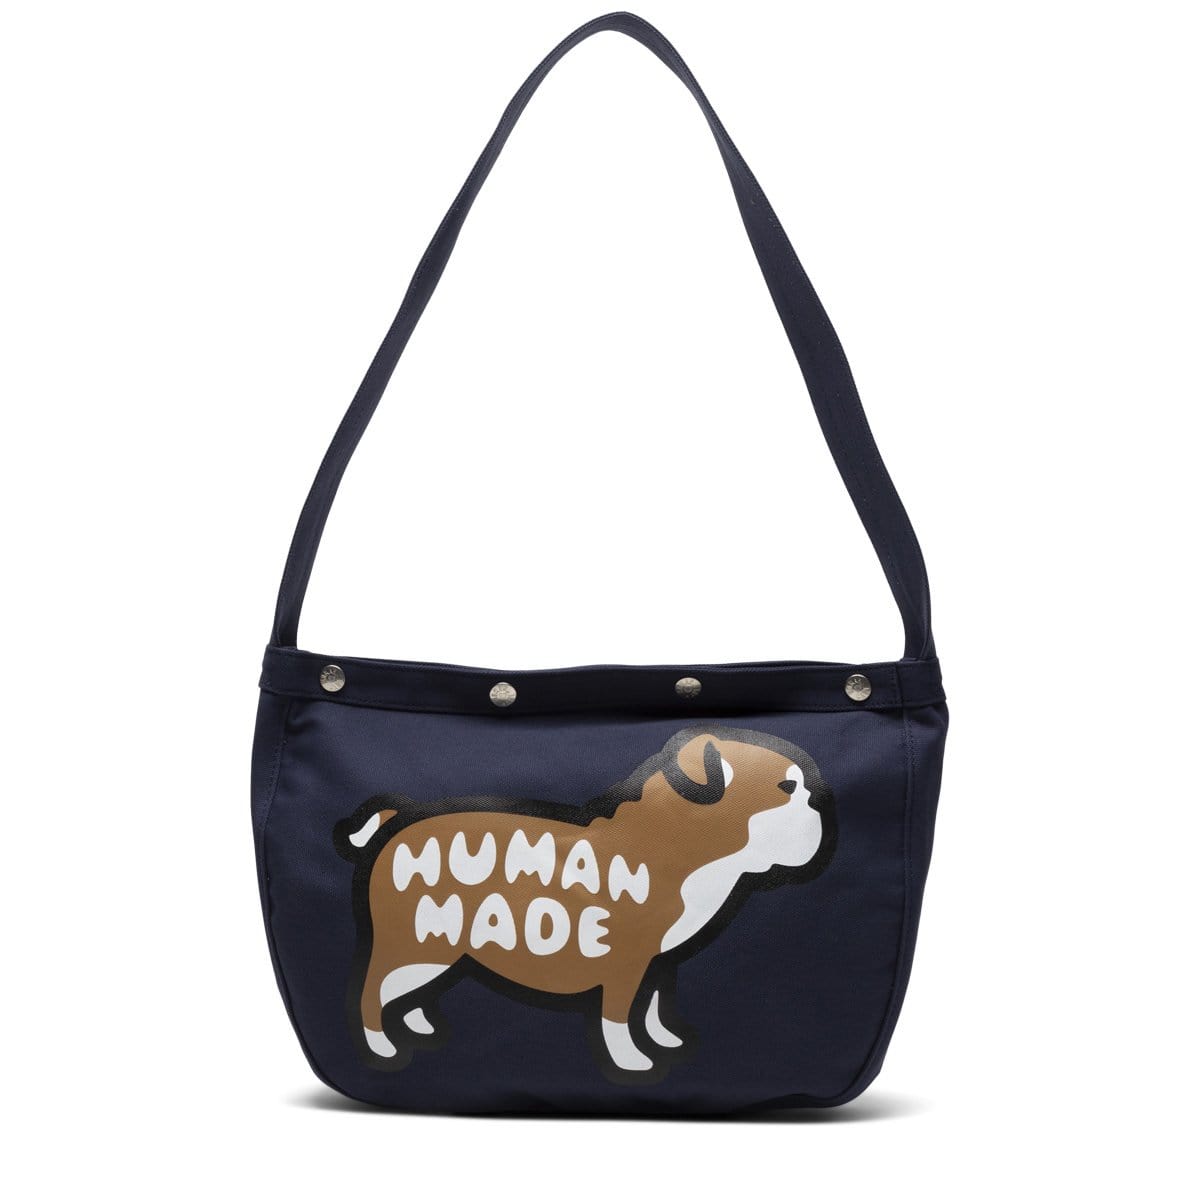 Human Made Bags NAVY / O/S PAPERBOY BAG